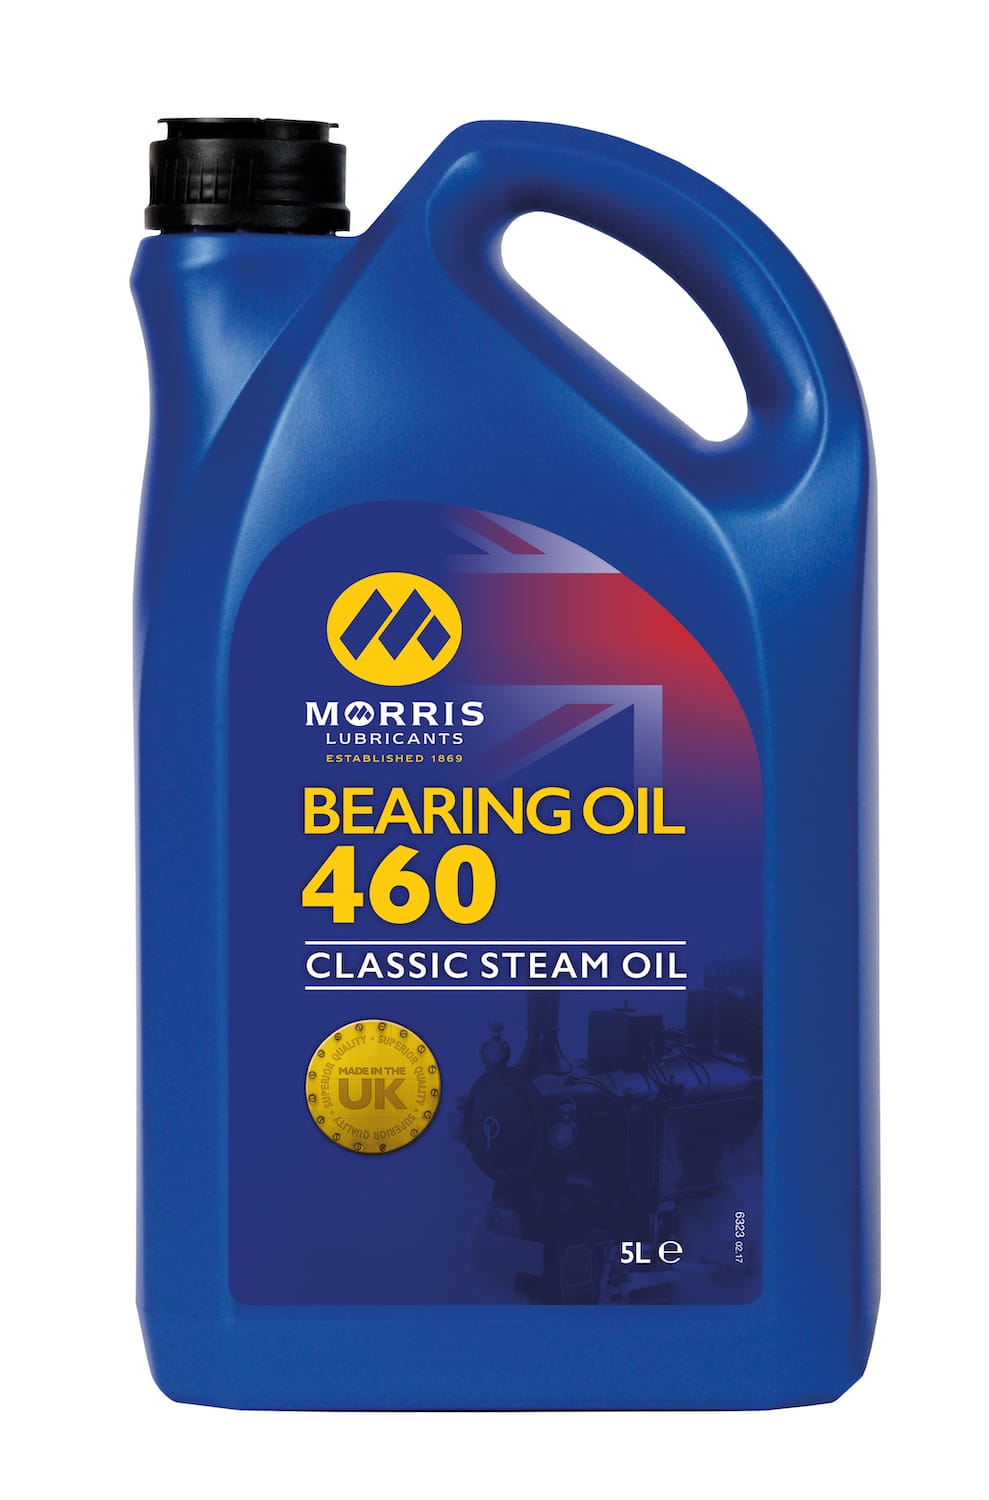 Bearing Oil 460 Classic Steam Oil